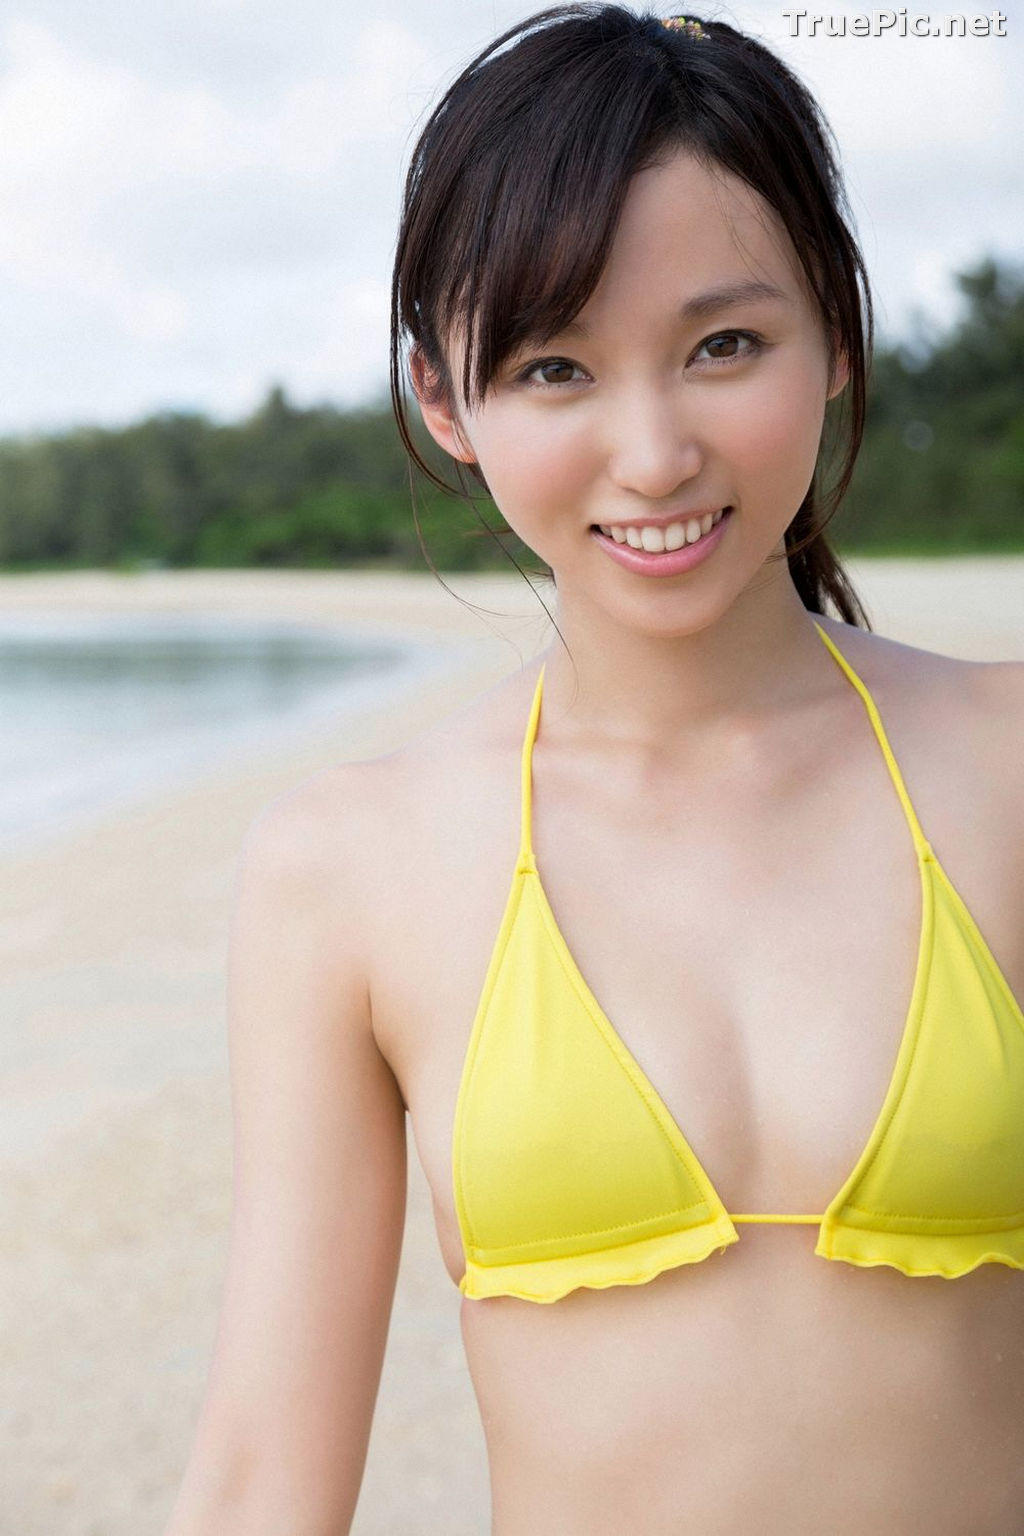 Image [YS Web] Vol.527 - Japanese Gravure Idol and Singer - Risa Yoshiki - TruePic.net - Picture-70